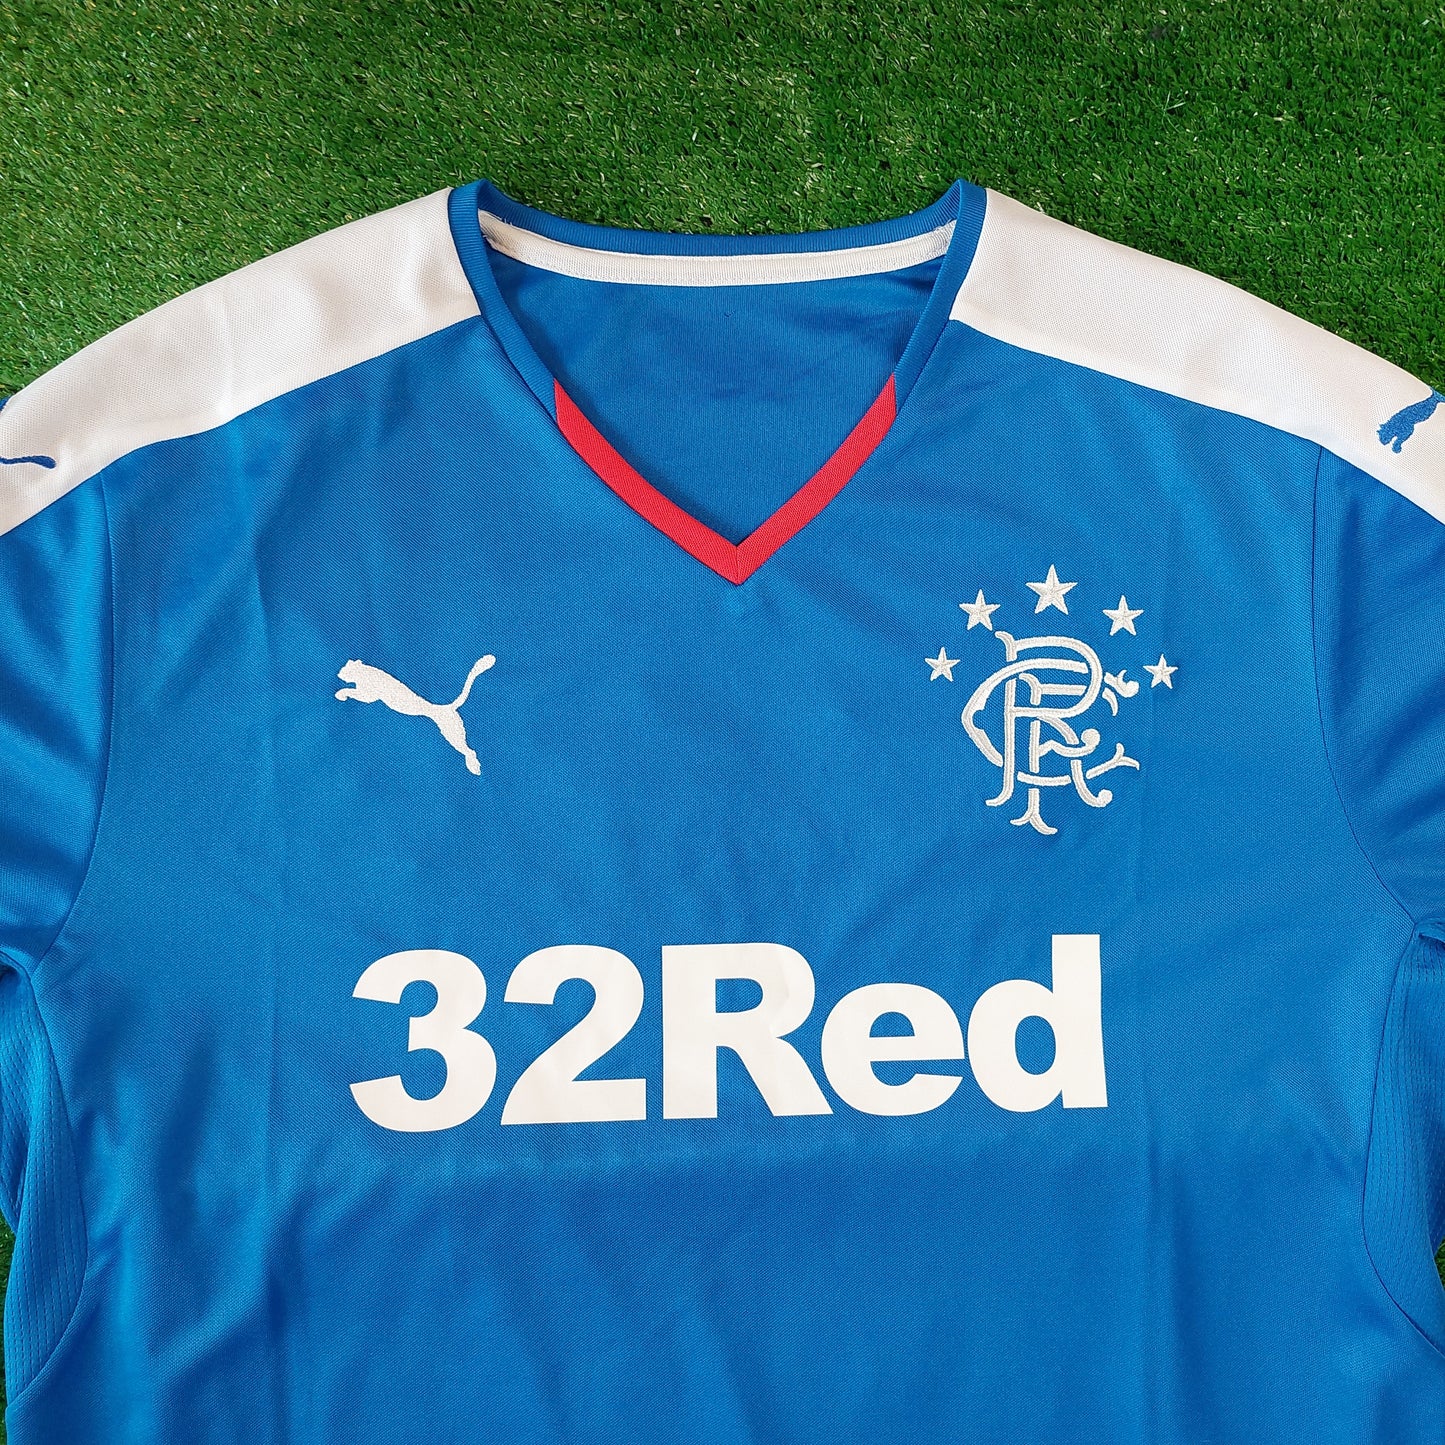 Rangers F.C. 2015/16 Home Shirt (Excellent) - Size XXL